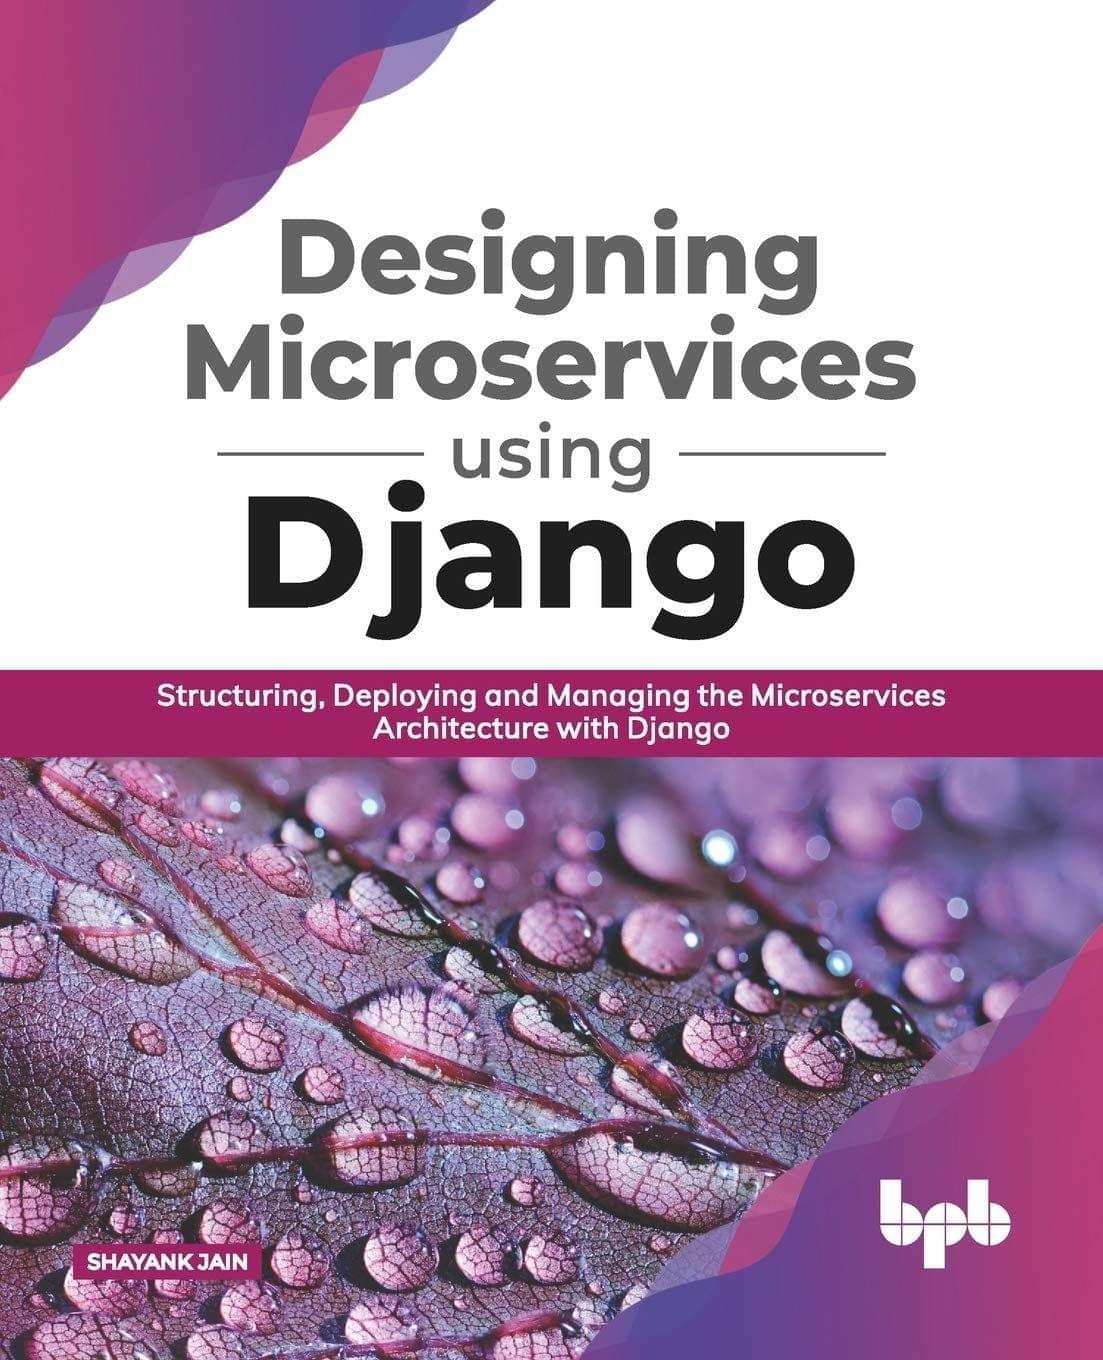 Designing Microservices using Django [Paperback] Shayank Jain